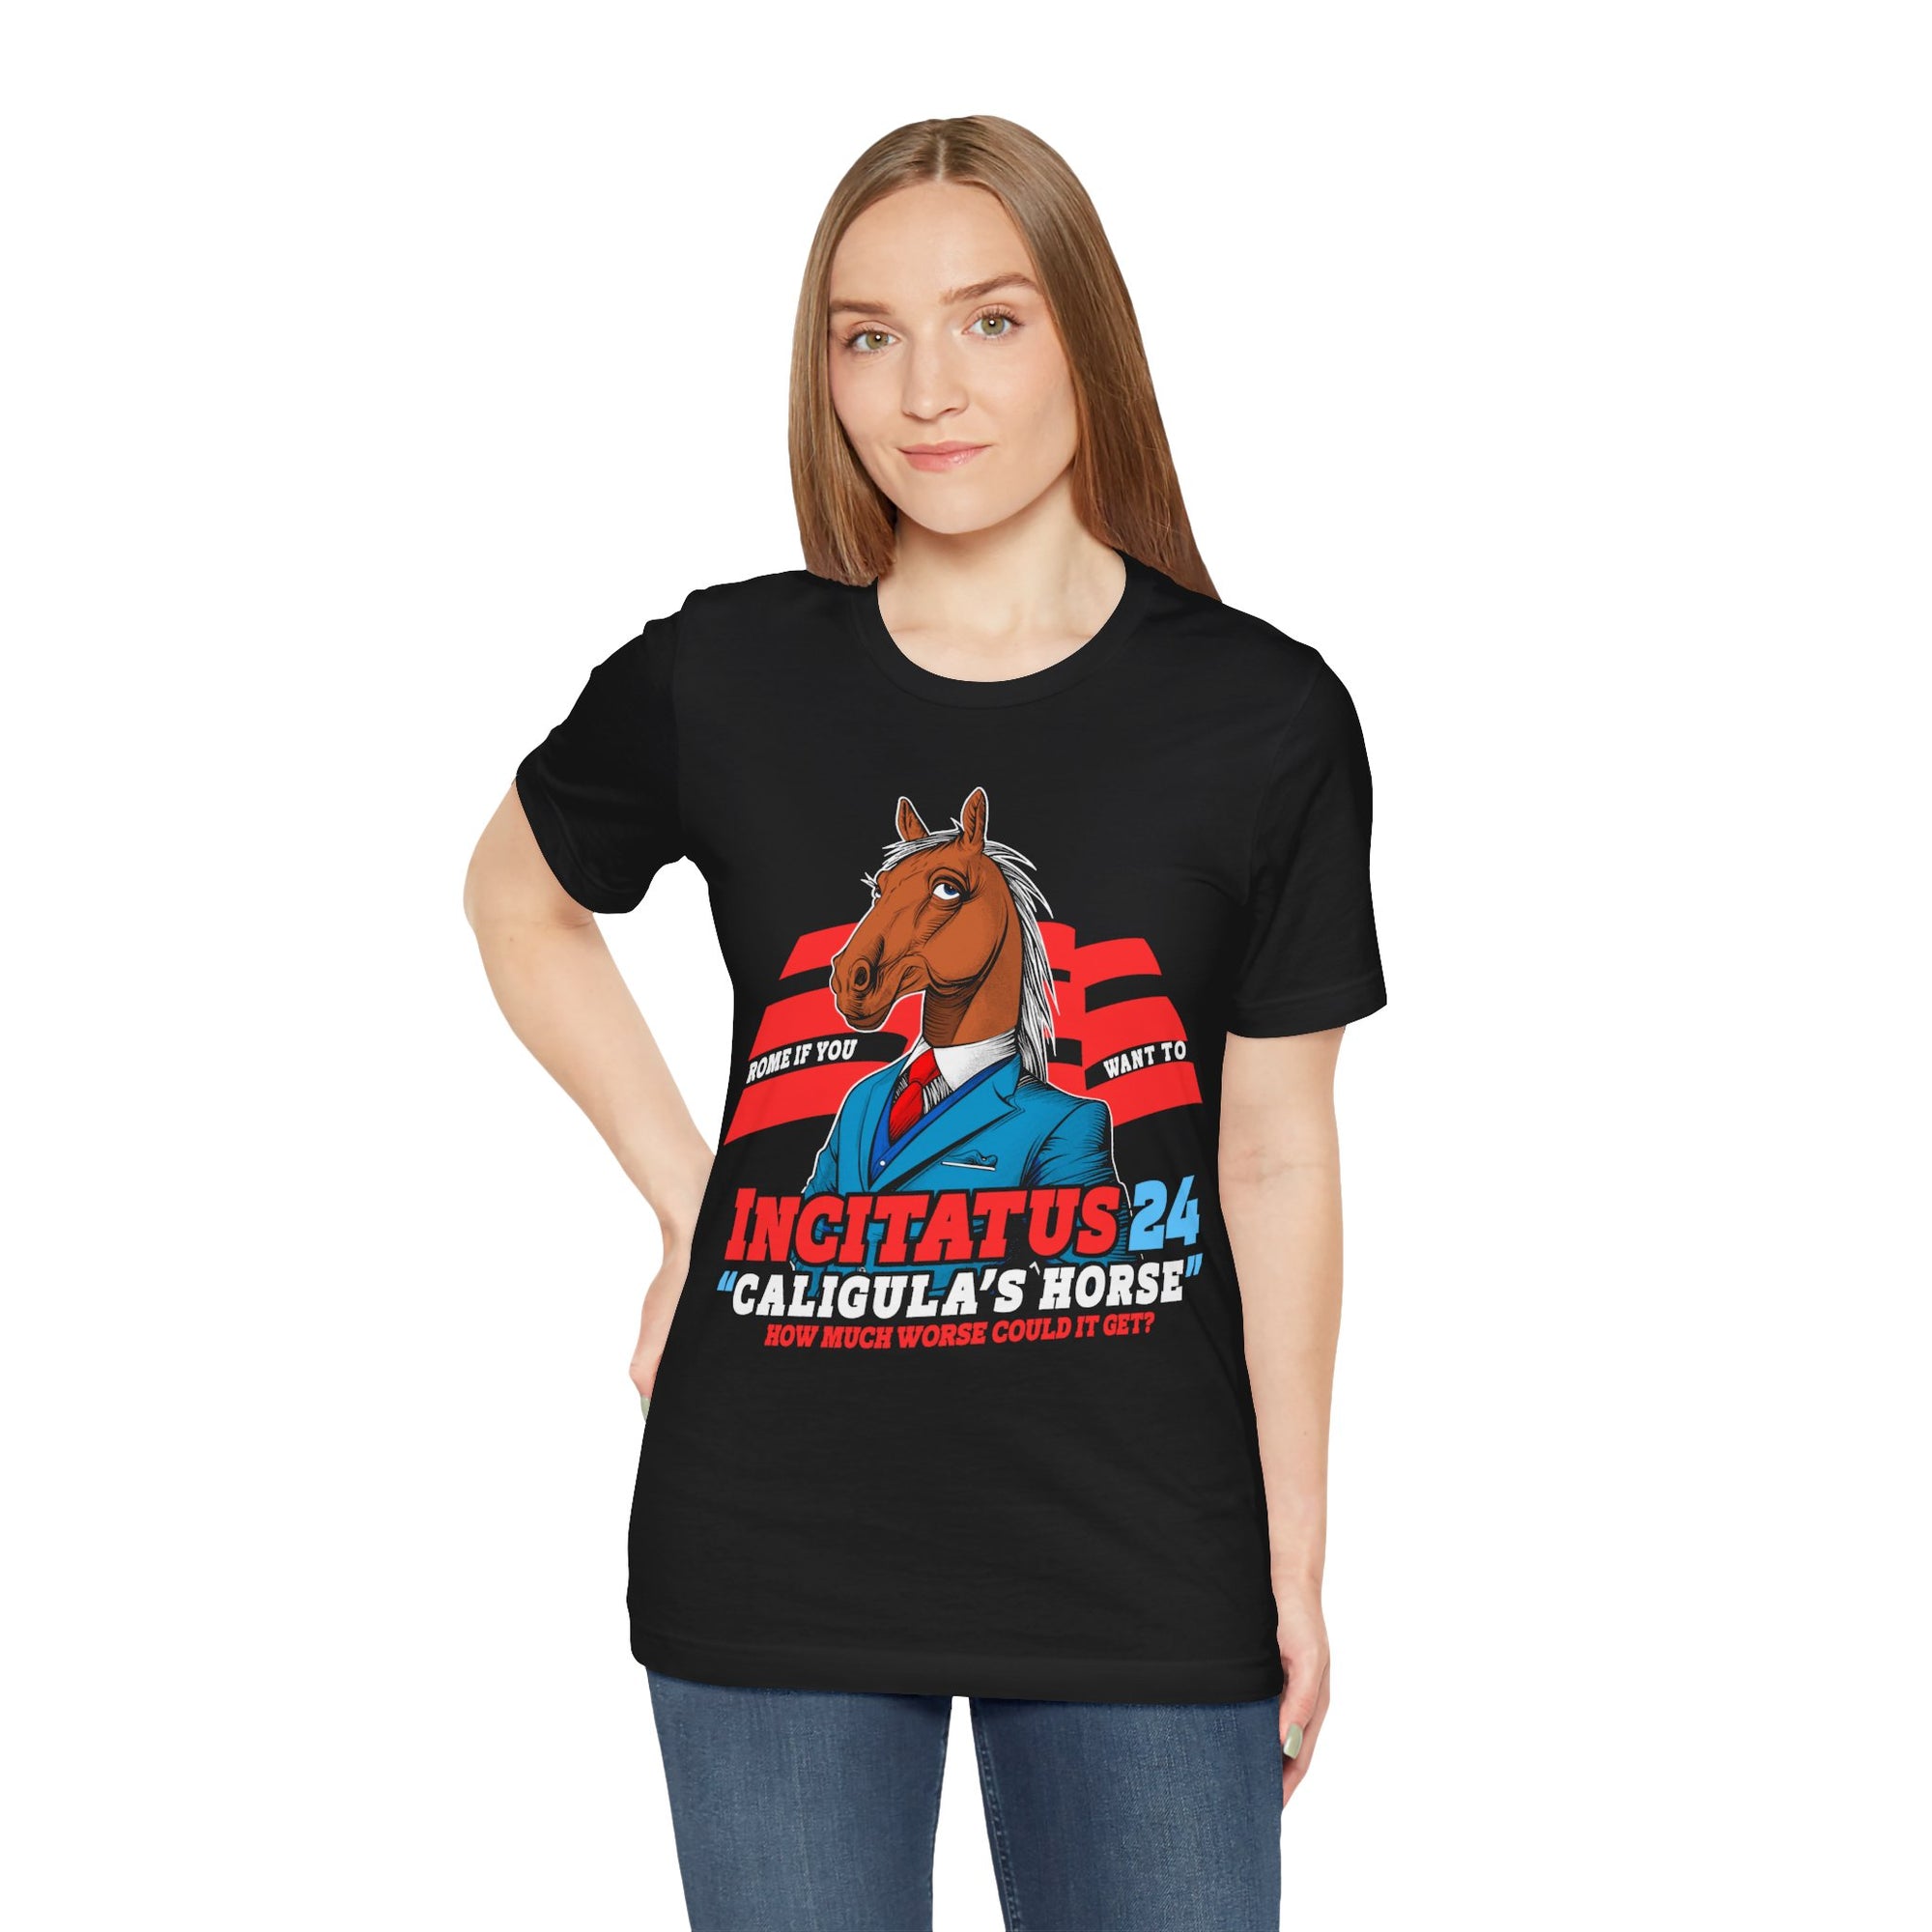 Incitatus 24! - "Caligula's Horse" Crewneck T-shirt